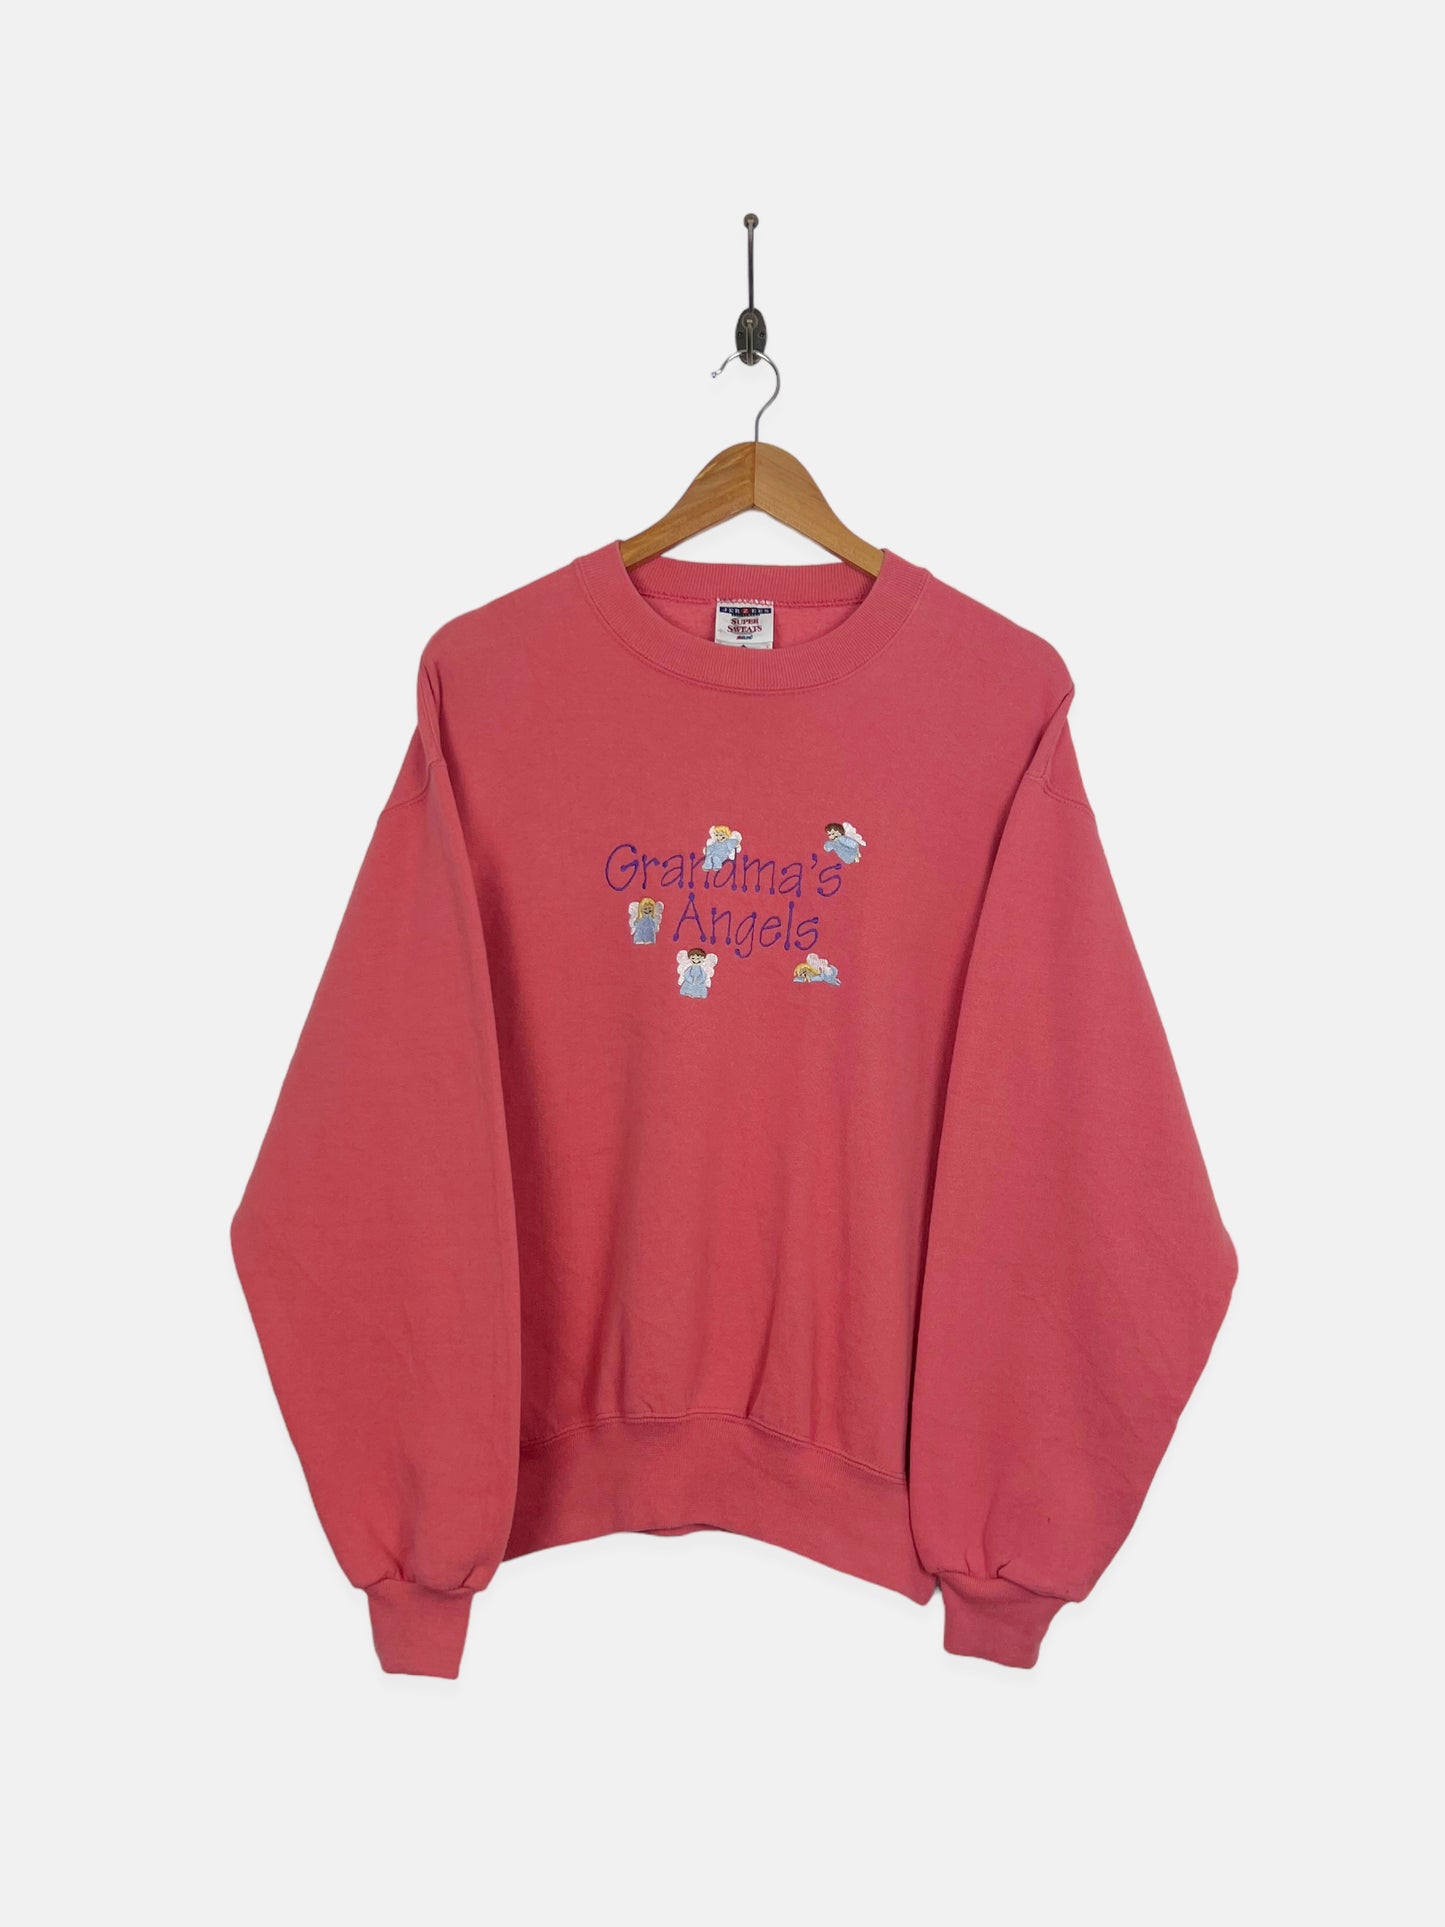 90's Grandma's Angels USA Made Embroidered Vintage Sweatshirt Size M